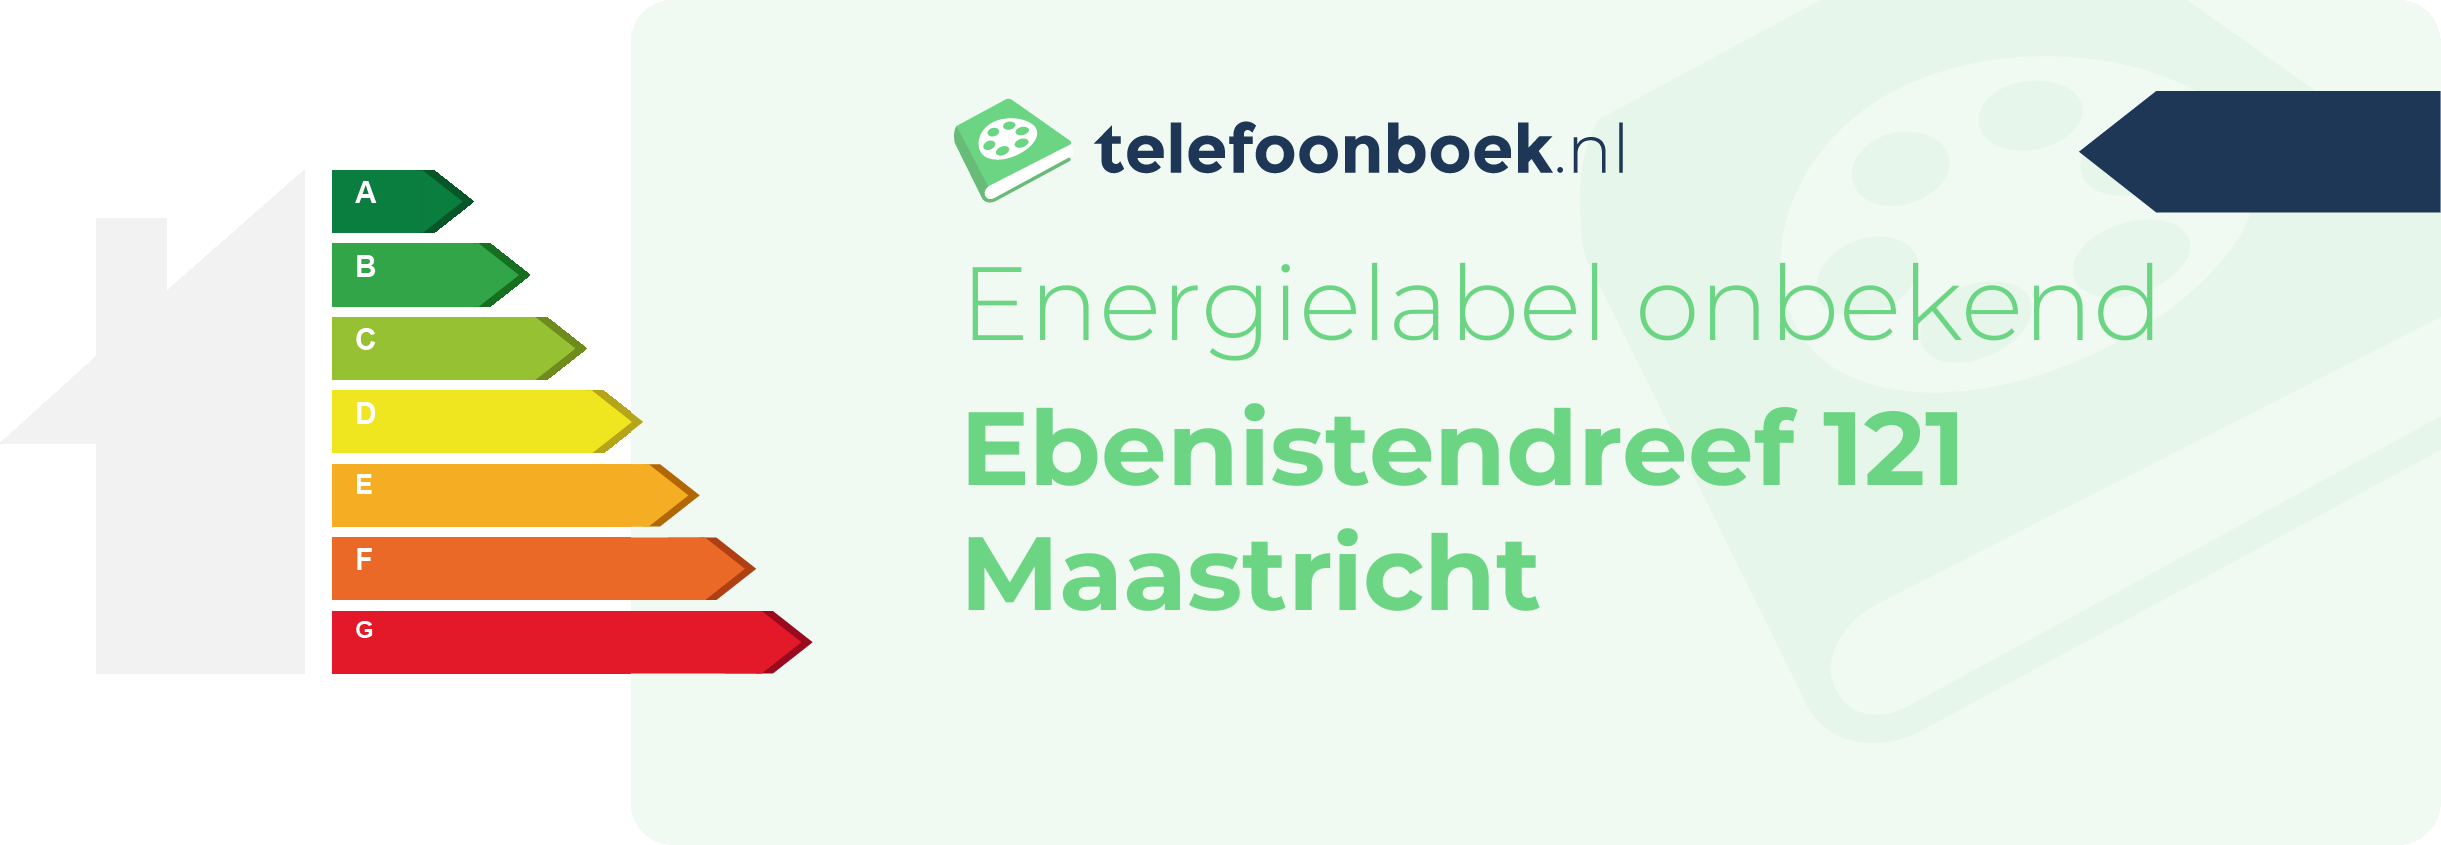 Energielabel Ebenistendreef 121 Maastricht